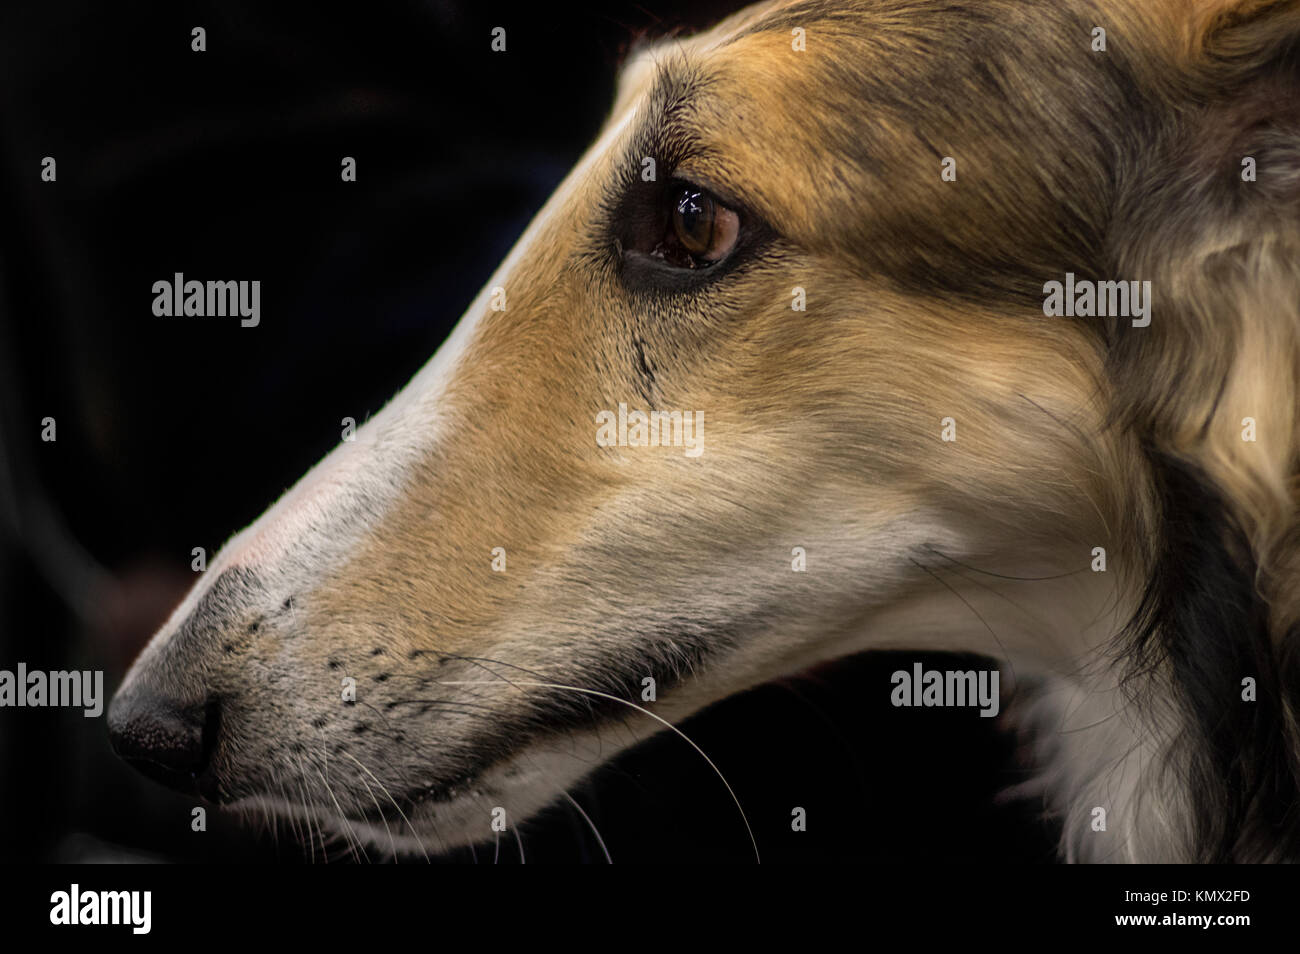 Borzoi Tri-color Sight Hound Show Dog Profile Portrait with Black Background Stock Photo